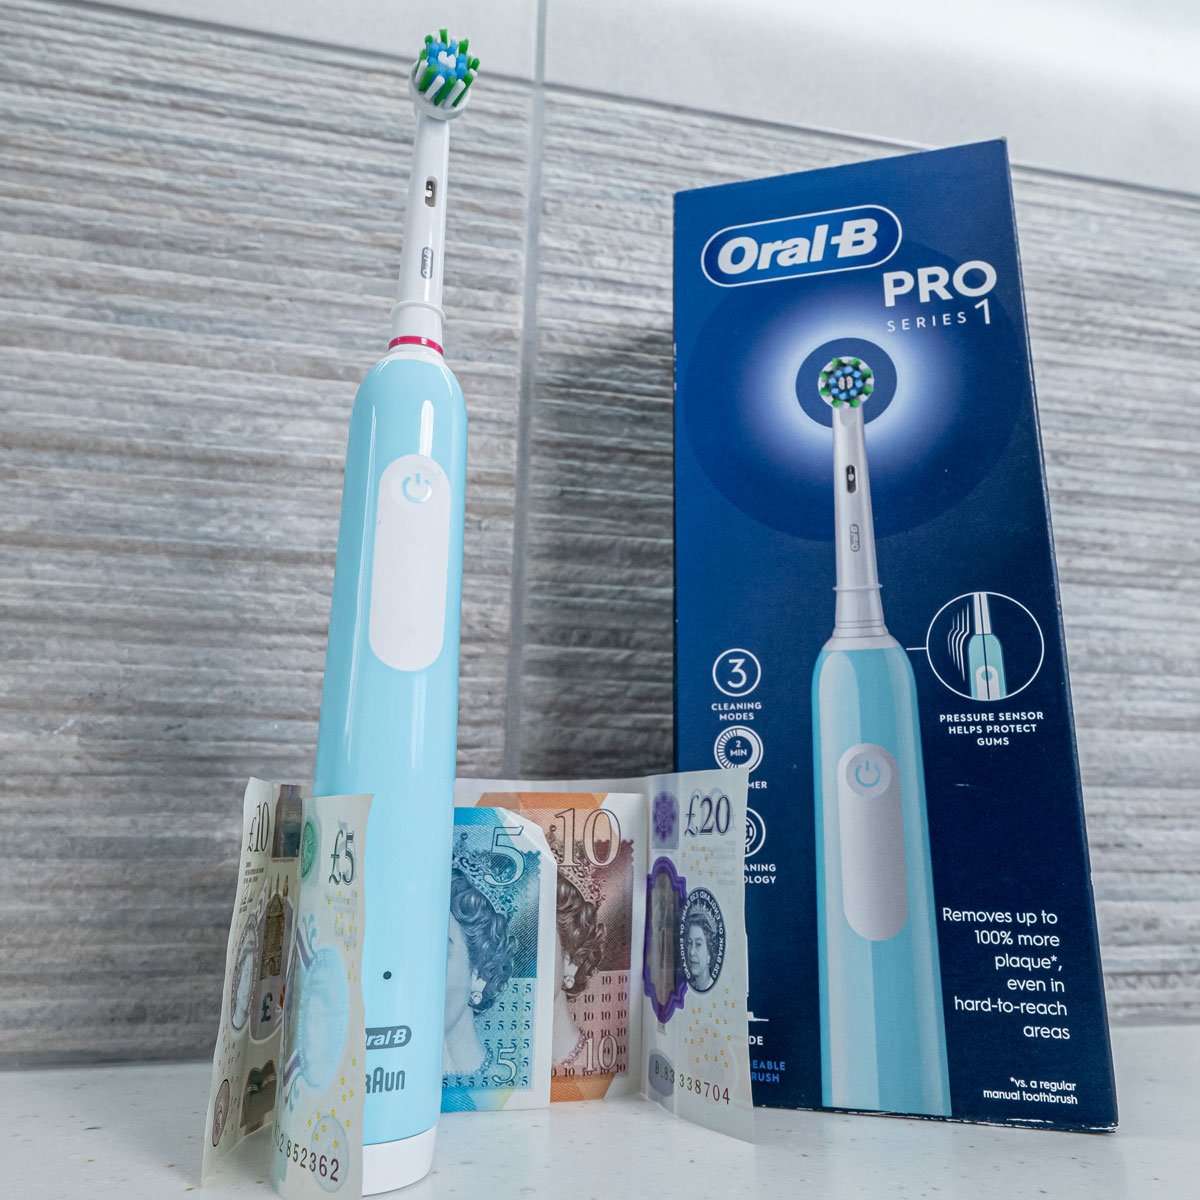 Oral-B Pro 1 Series review 2